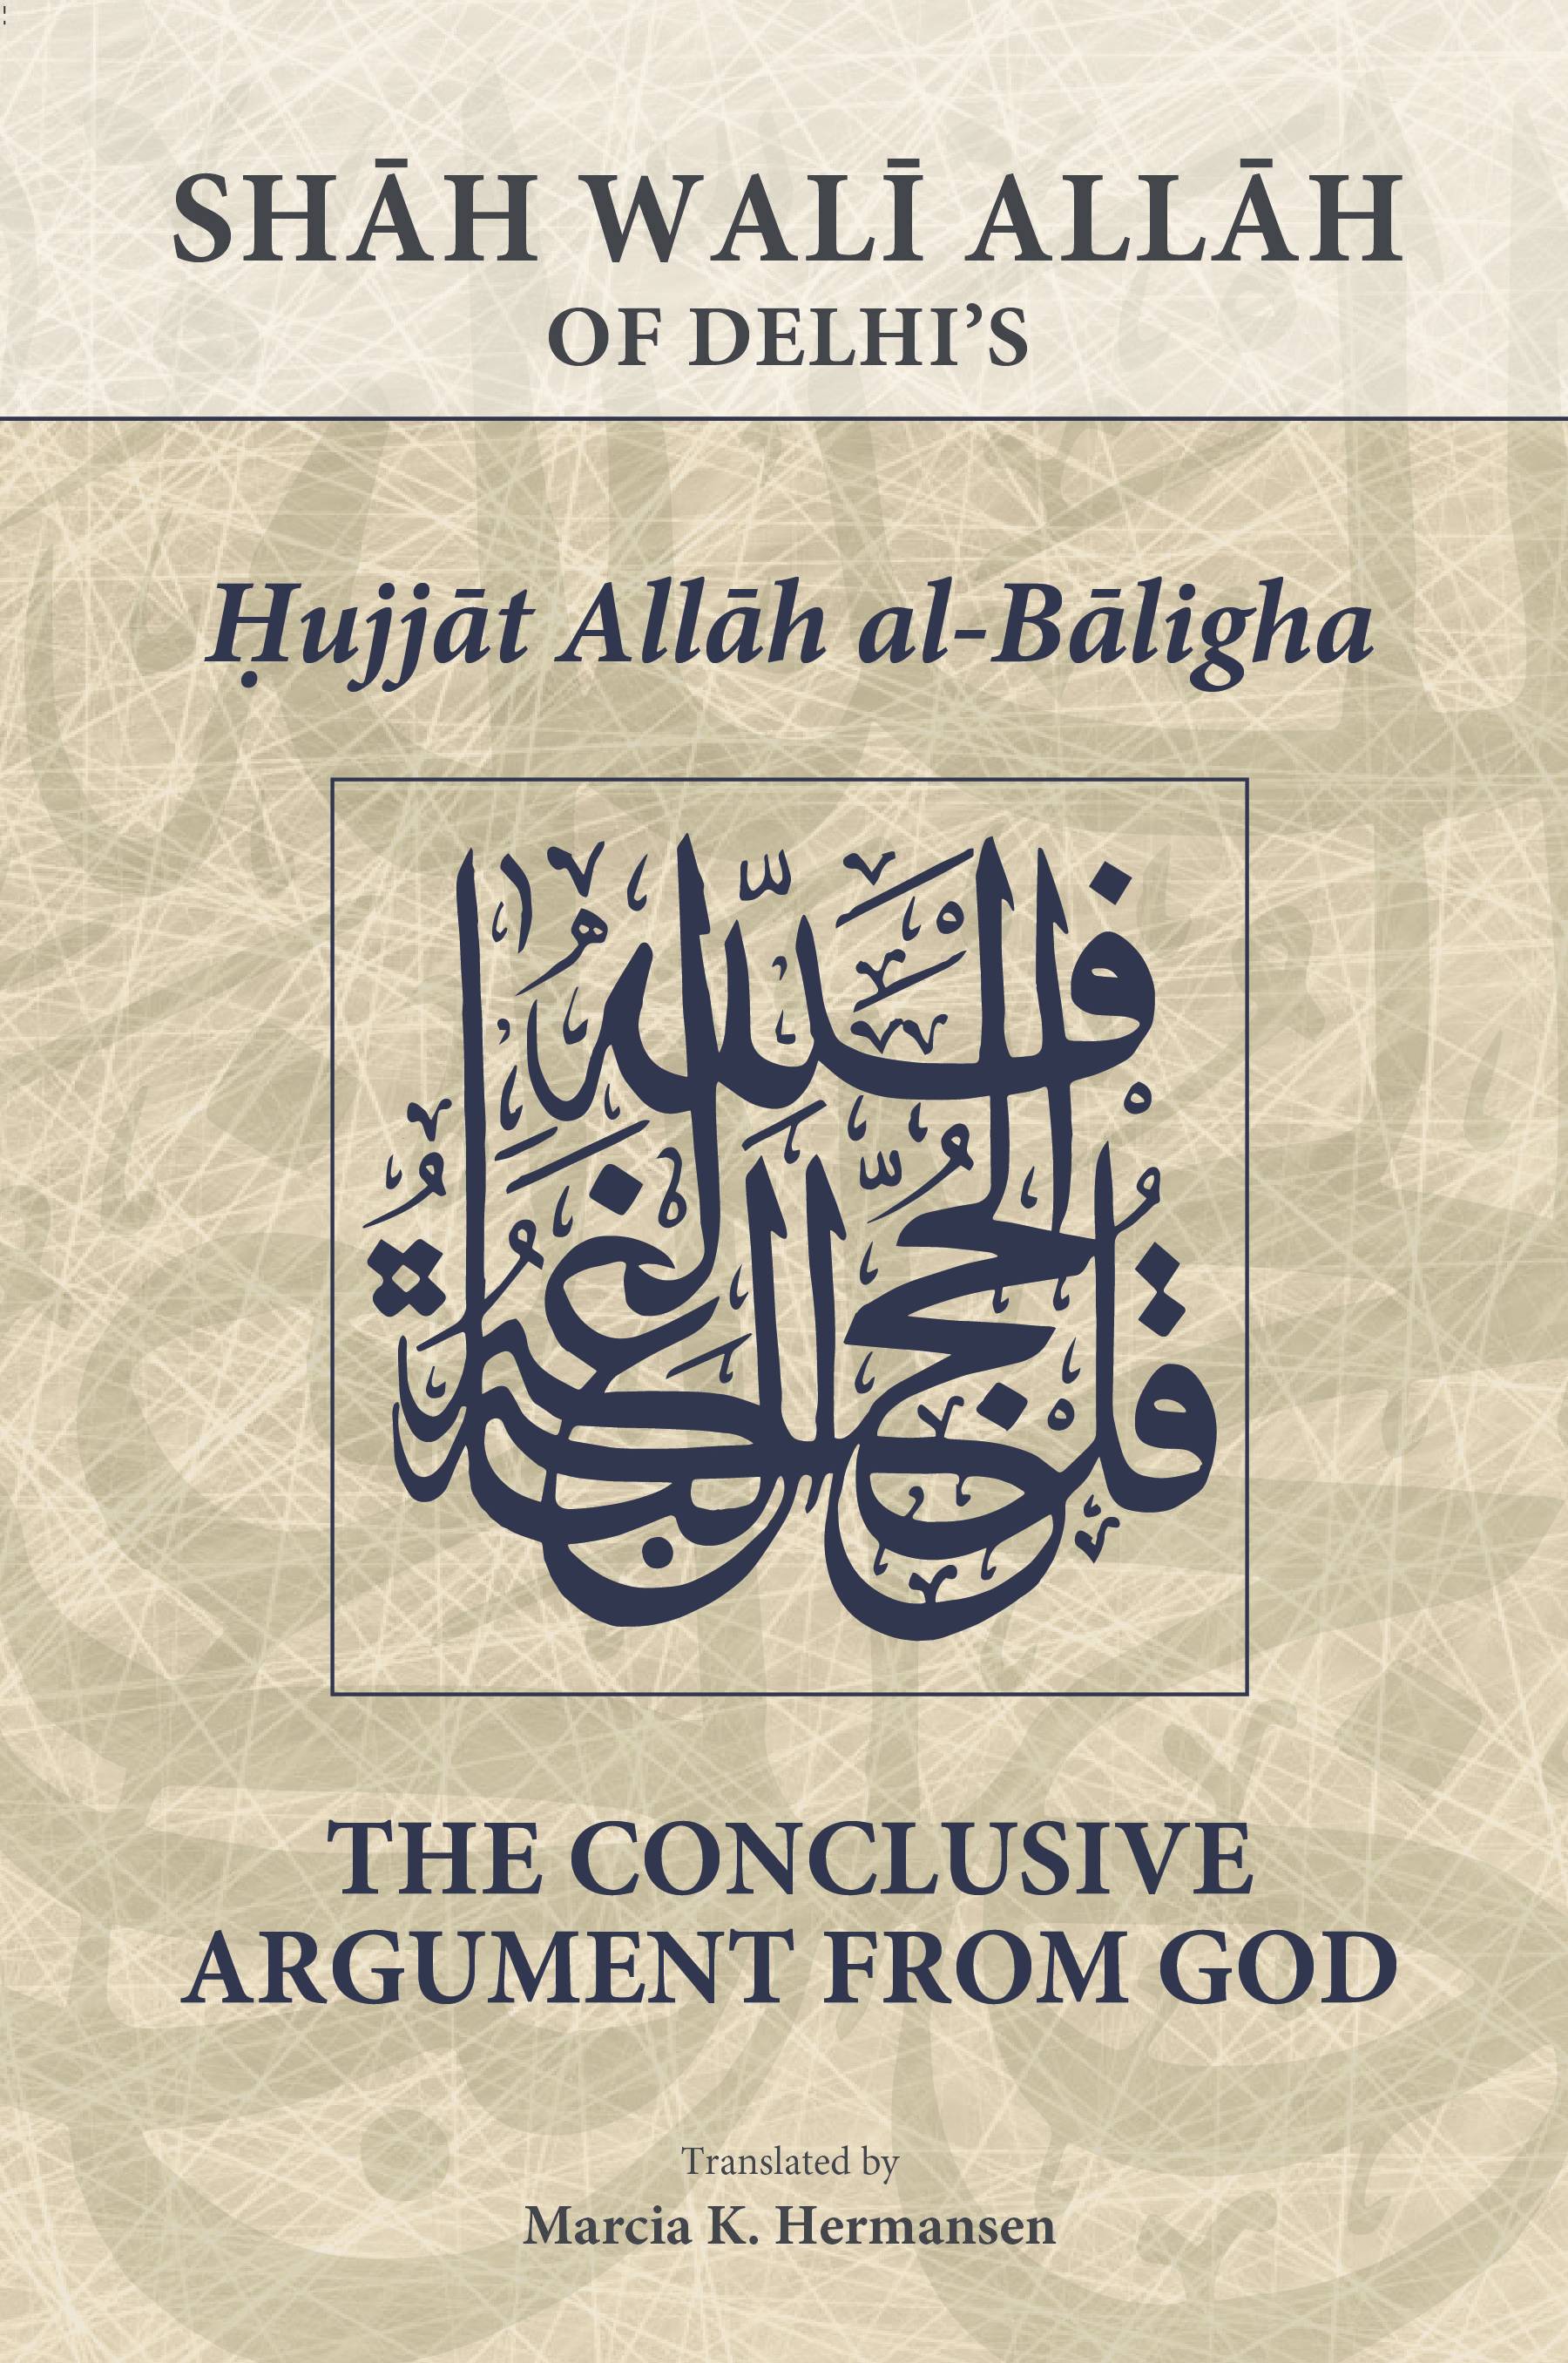 The Conclusive Argument From God: ?ujj?t All?h al-B?ligha - Shah Waliyullah - 9789670526959 - Islamic Book Trust